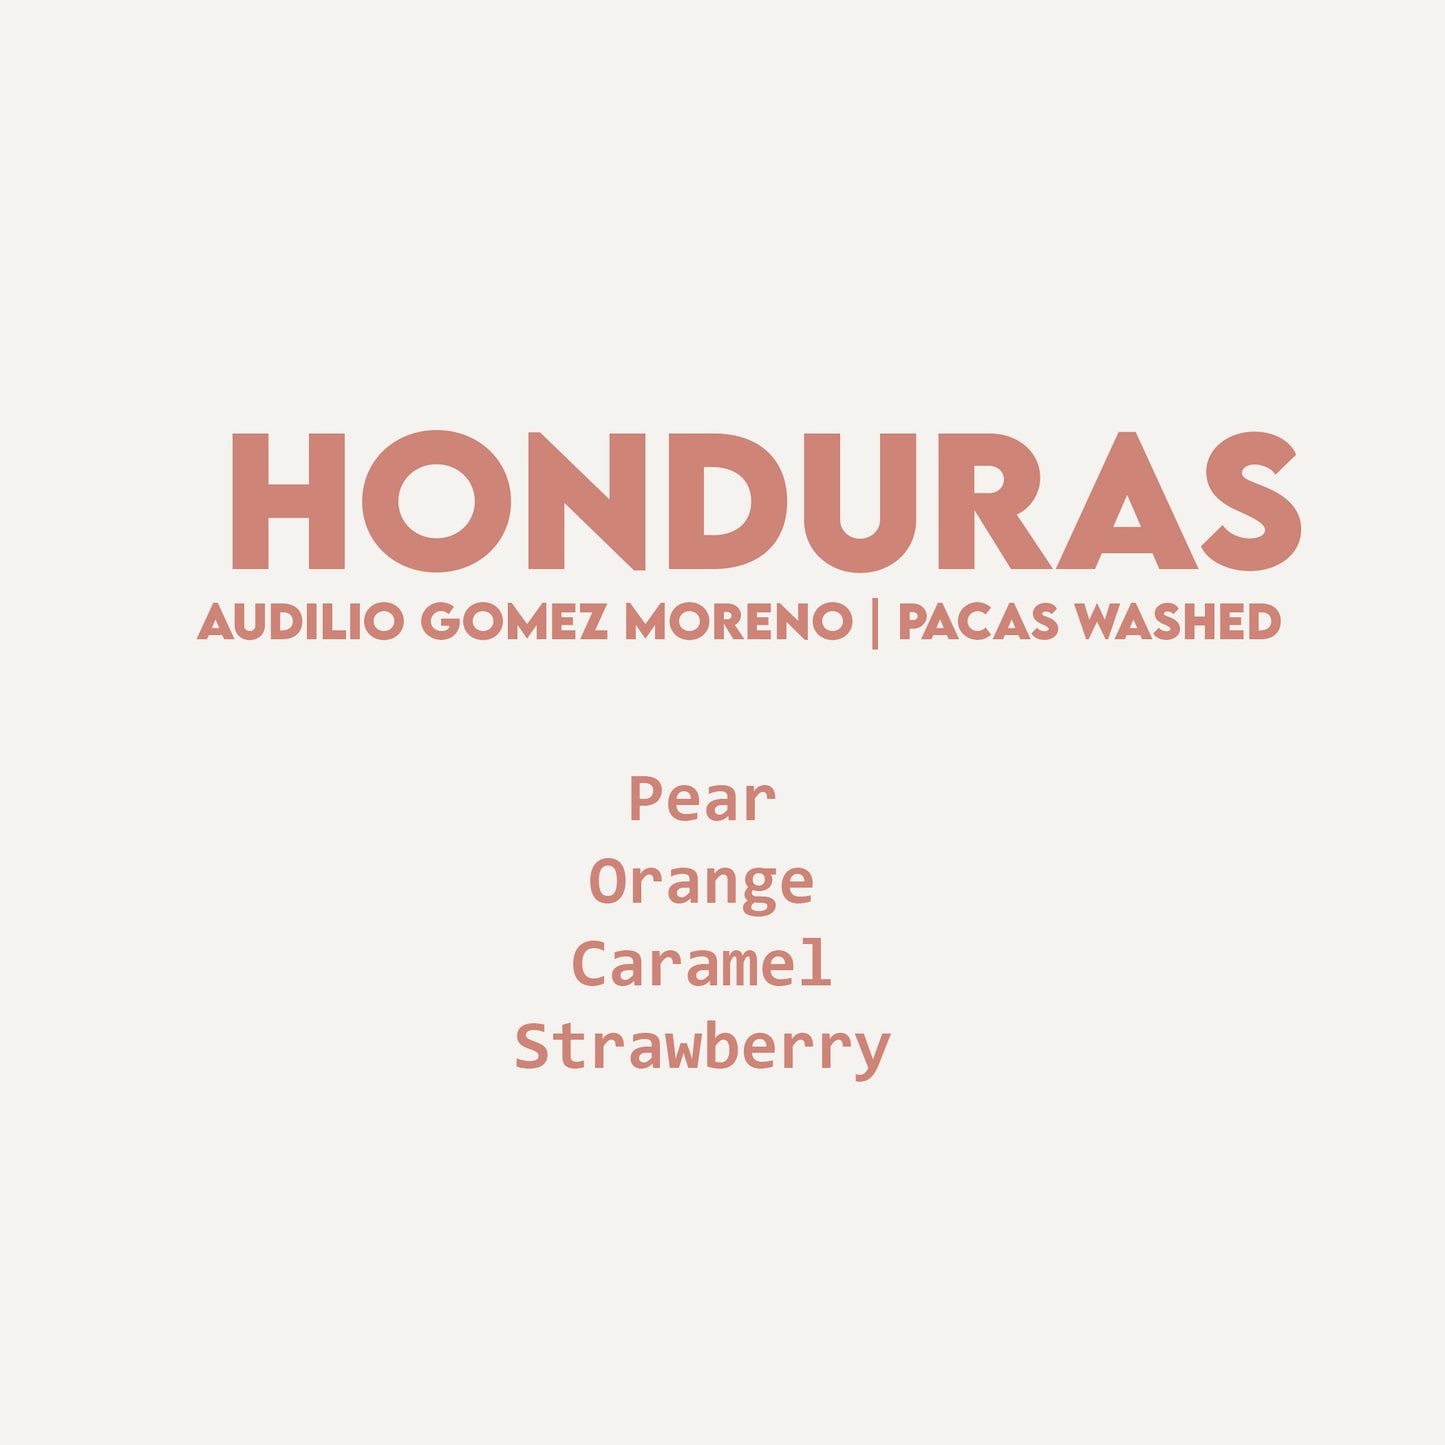 Honduras - Audilio Gomez Moreno | Pacas Washed